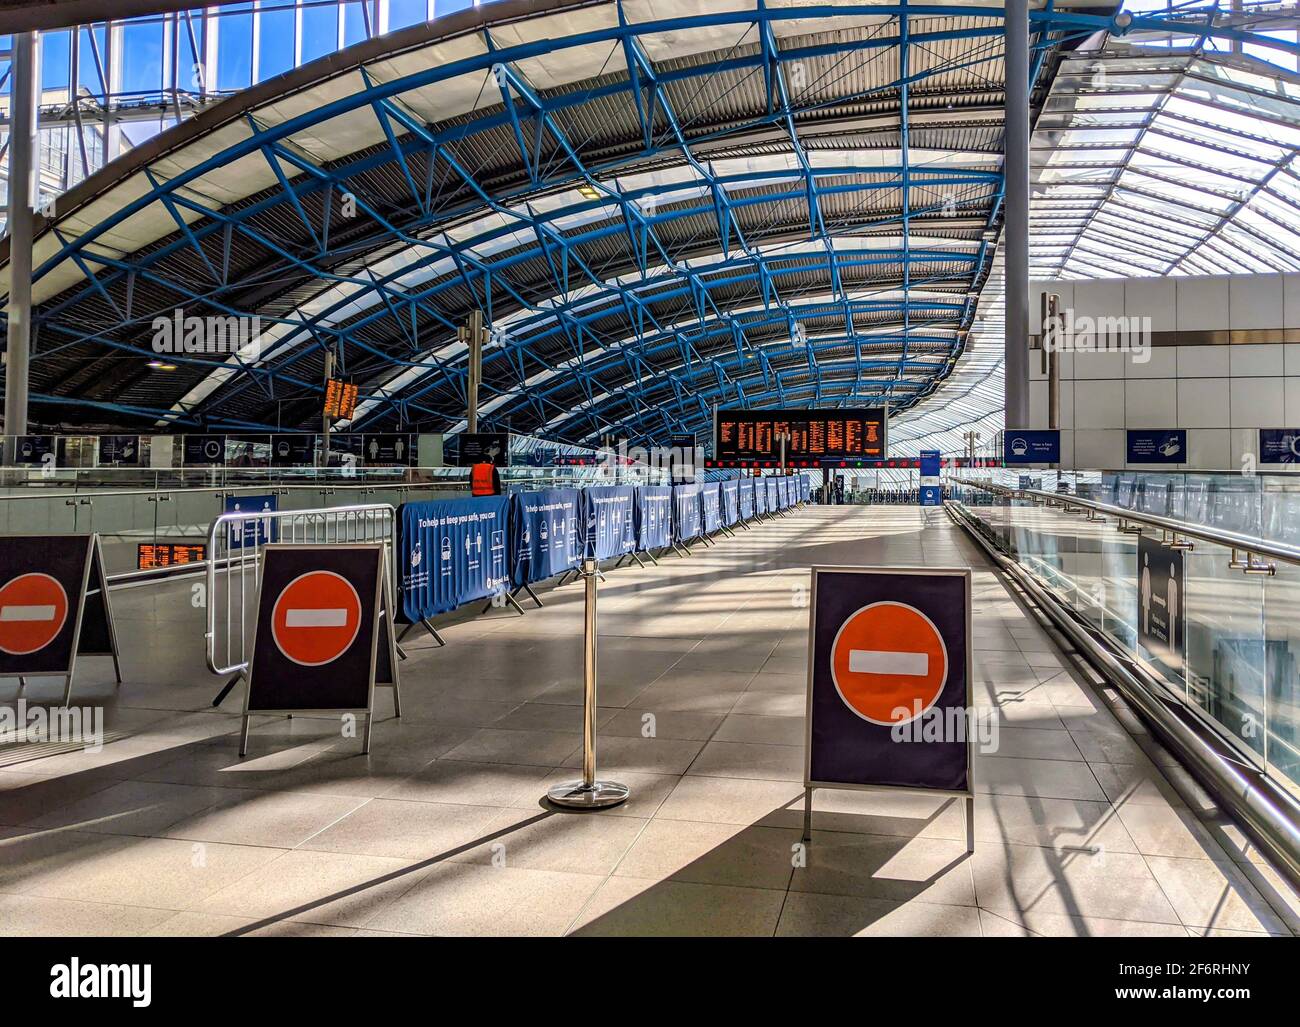 London Waterloo Bahnsteige 20 bis 24, vor kurzem renoviert. Stockfoto